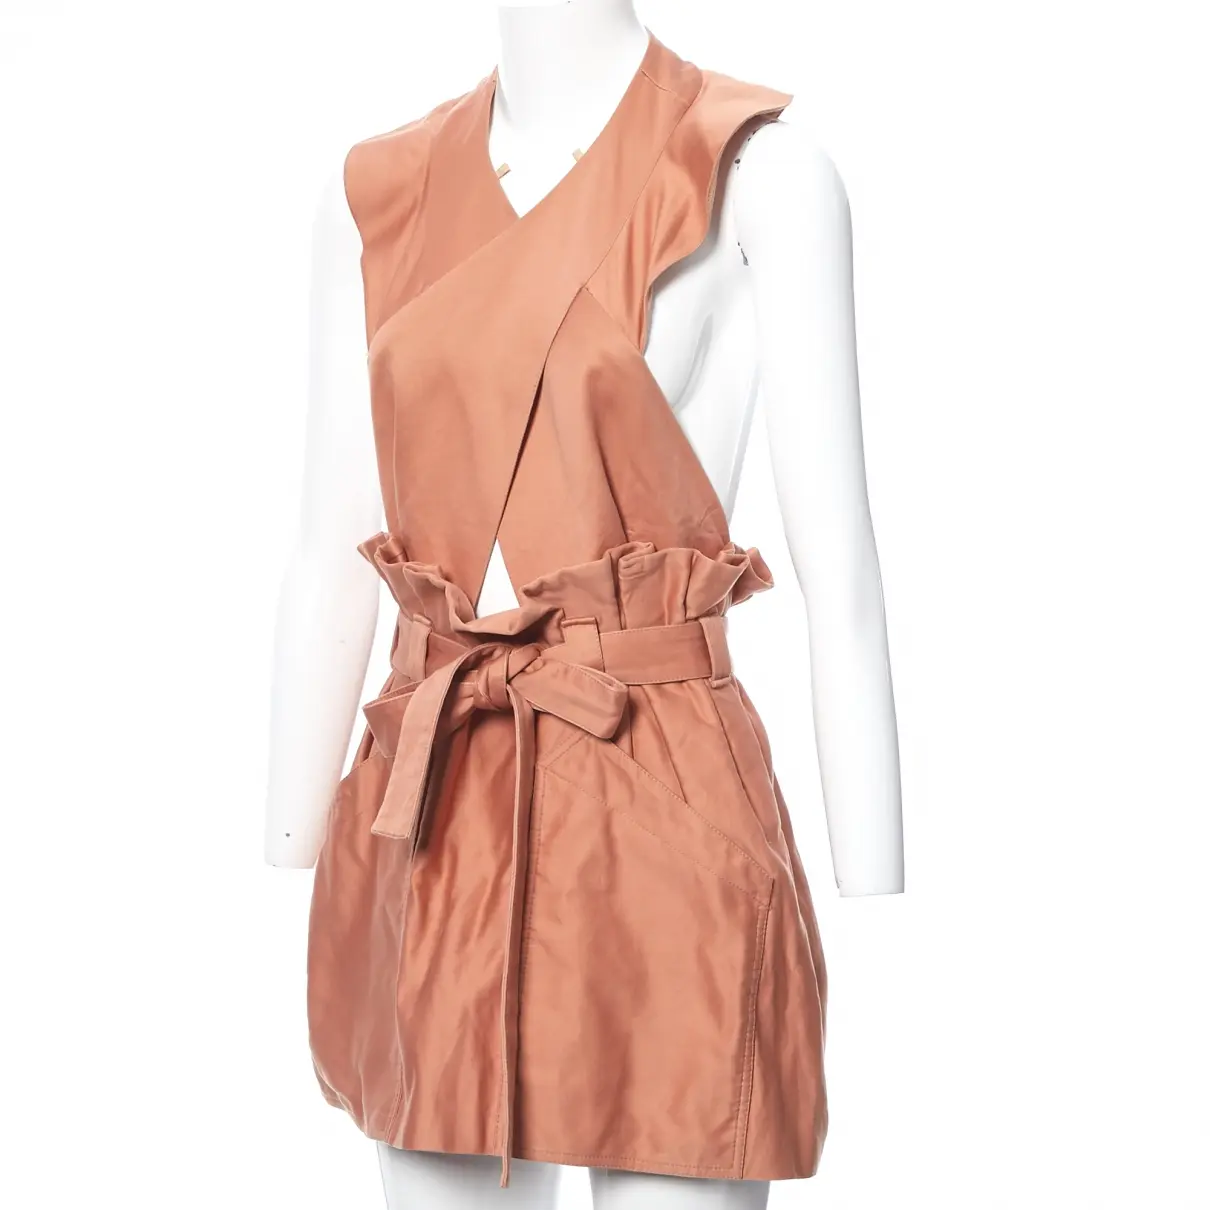 Chloé BACKLESS DRESS for sale